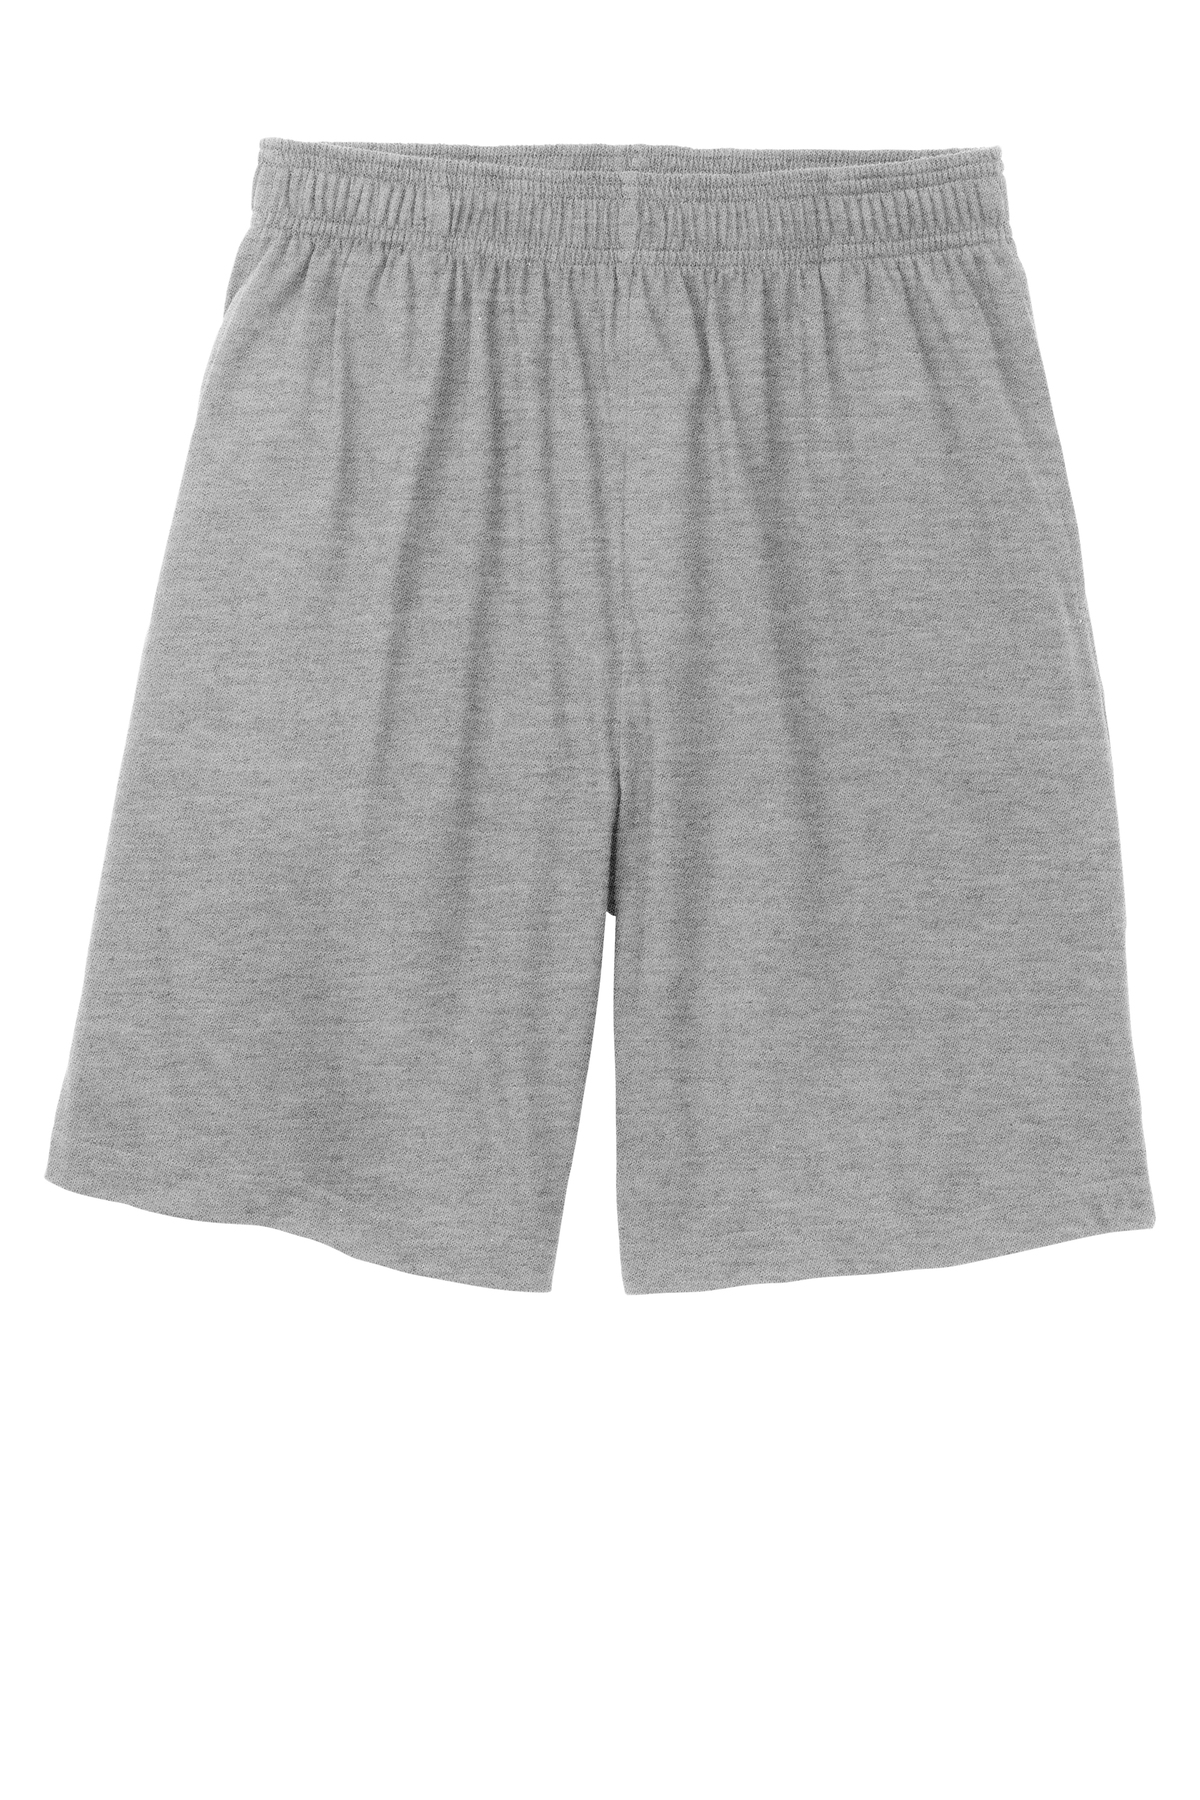 Sport-Tek Jersey Knit Short with Pockets | Product | SanMar